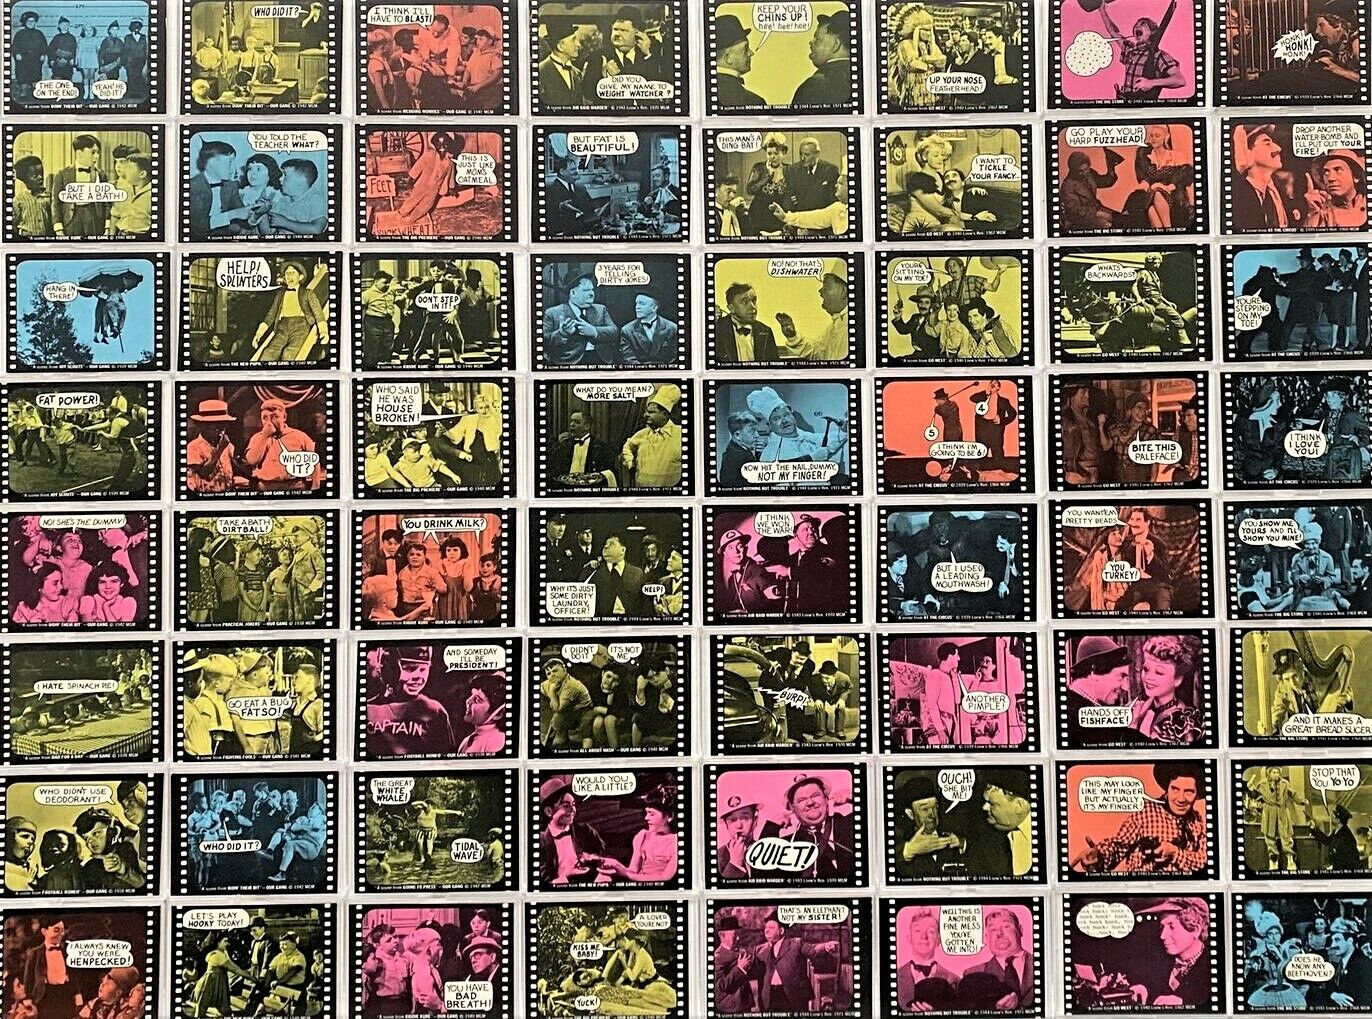 HOLLYWOOD SLAP STICKERS © 1975 Fleer Complete 66 Sticker Card Set